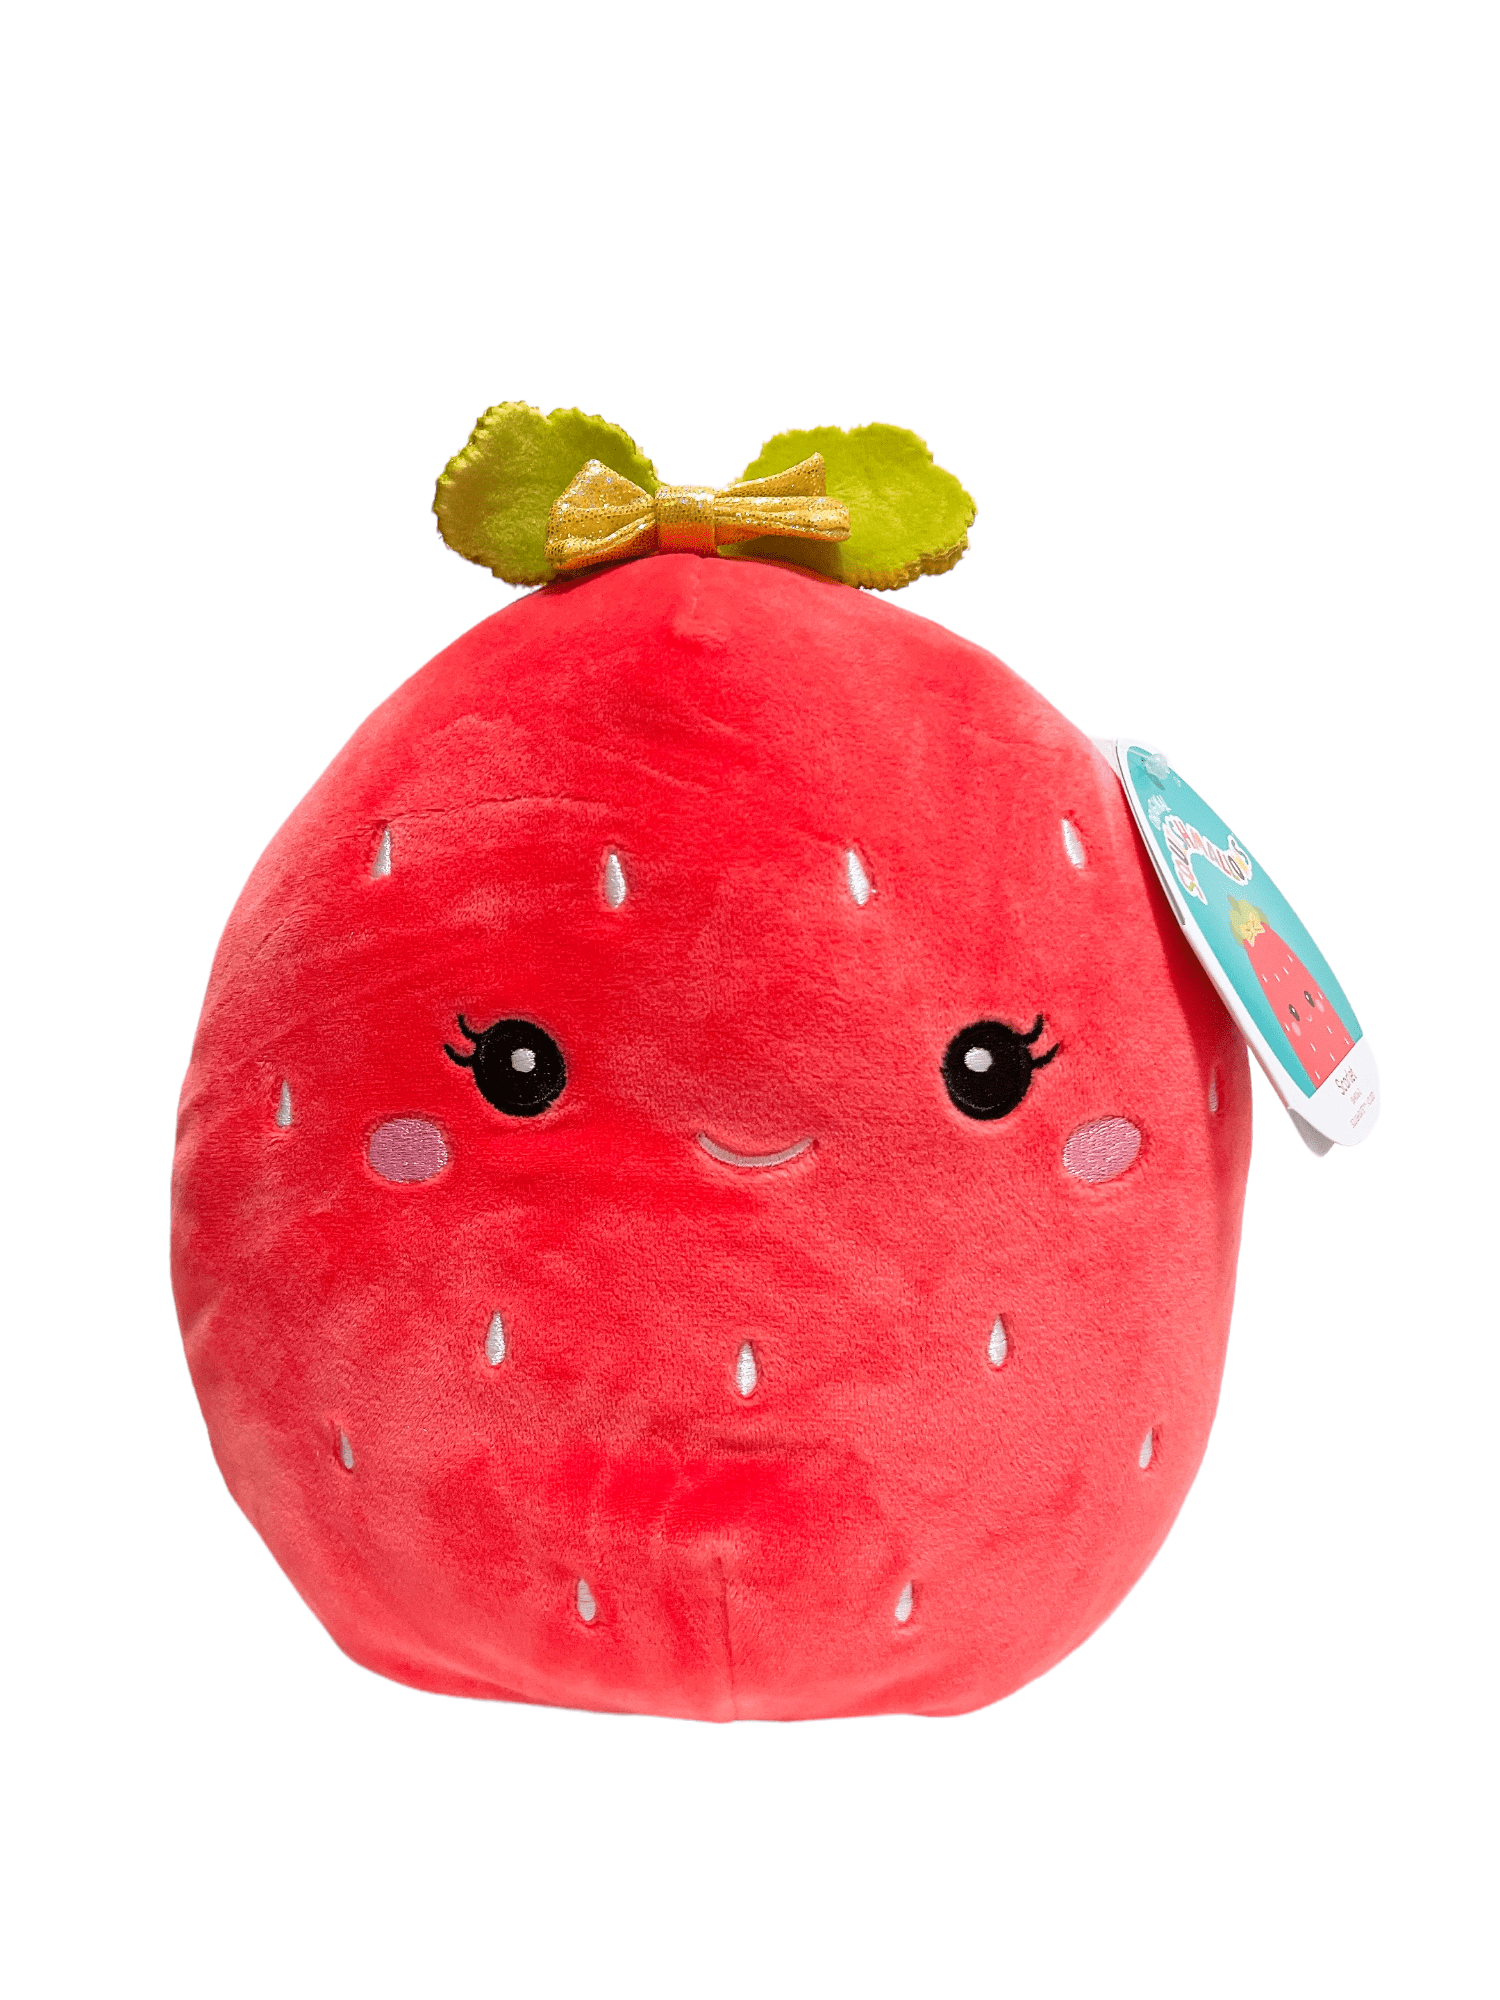 Squishmallow Scarlet Strawberry 8" Plush Pillow Toy Fruit Soft RARE HTF EUC 2019 for sale online 